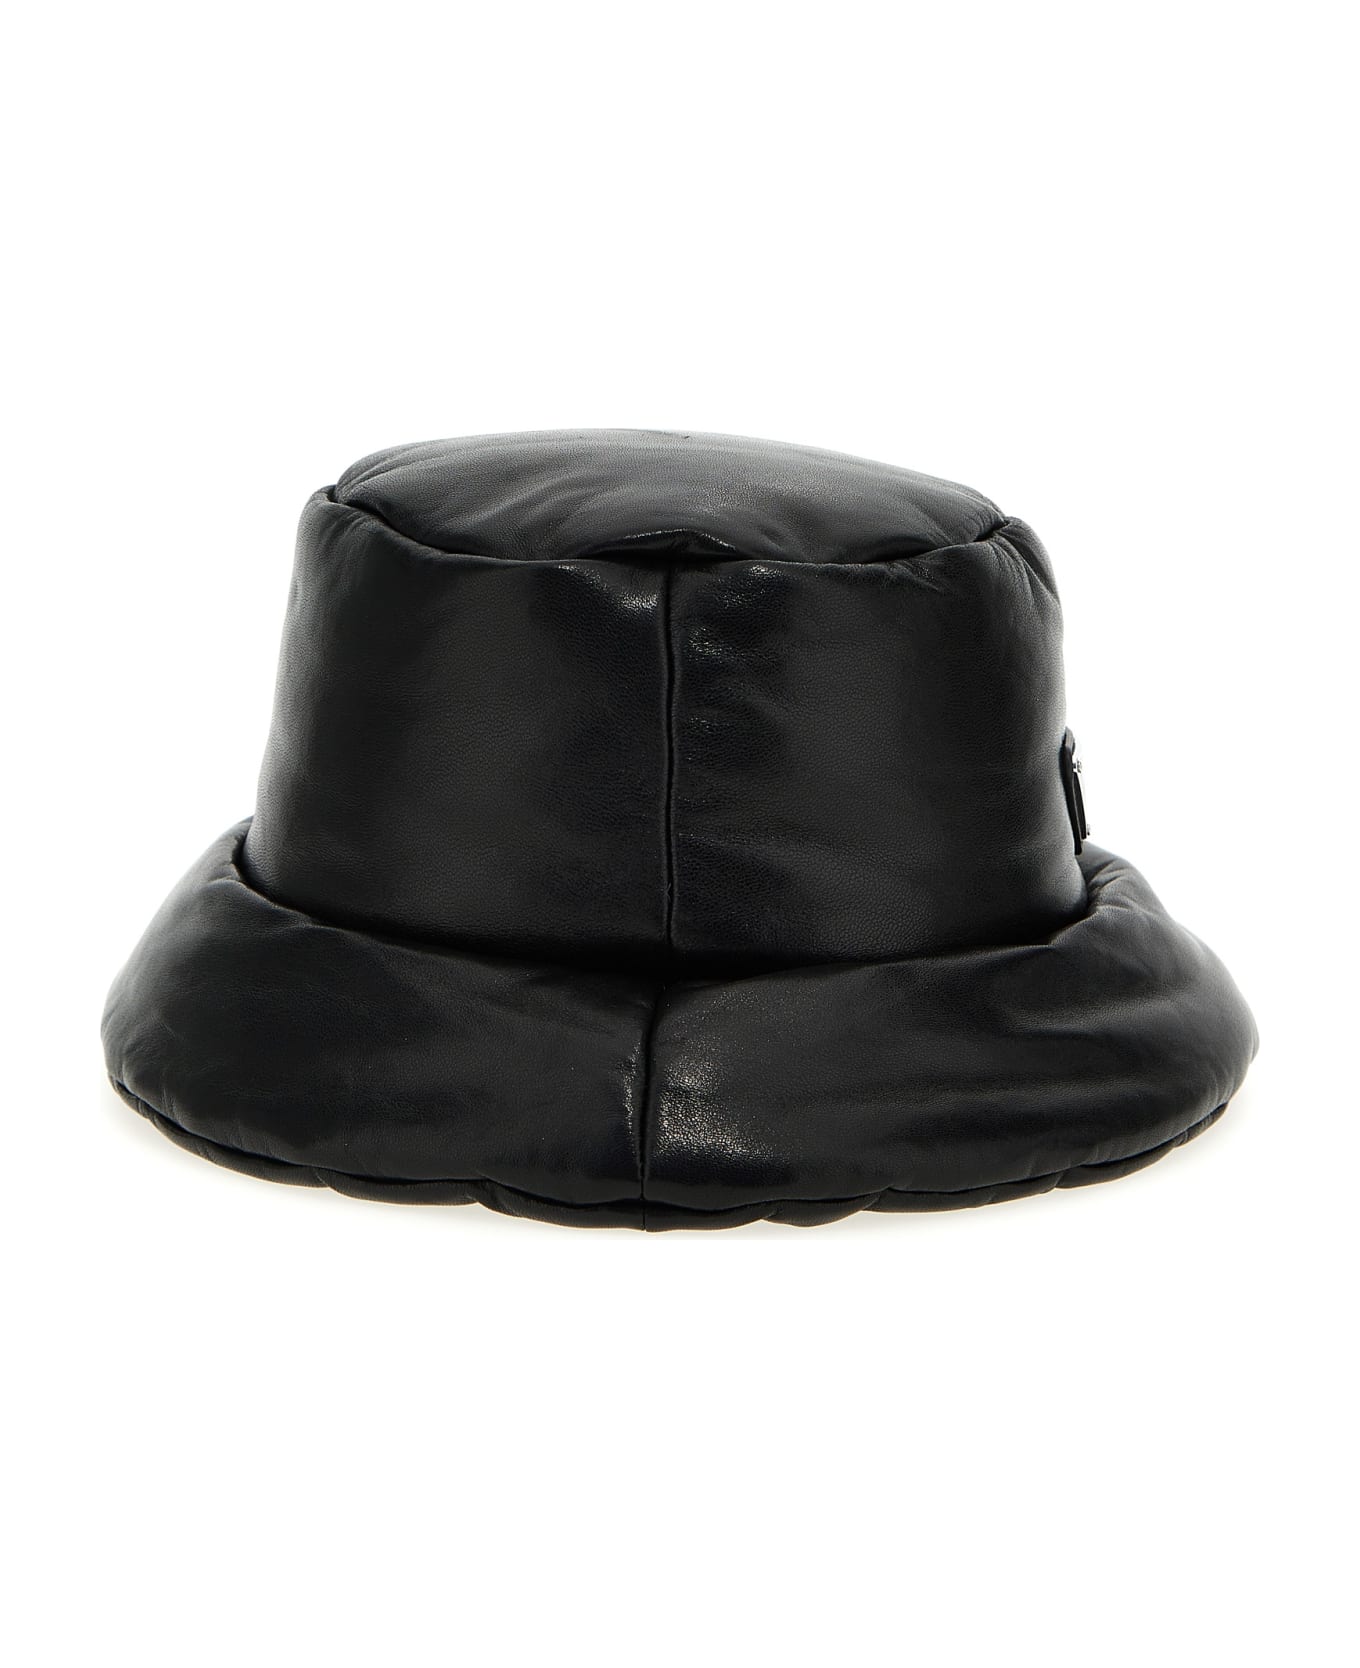 Prada Leather Logo Hat - Black ヘアアクセサリー